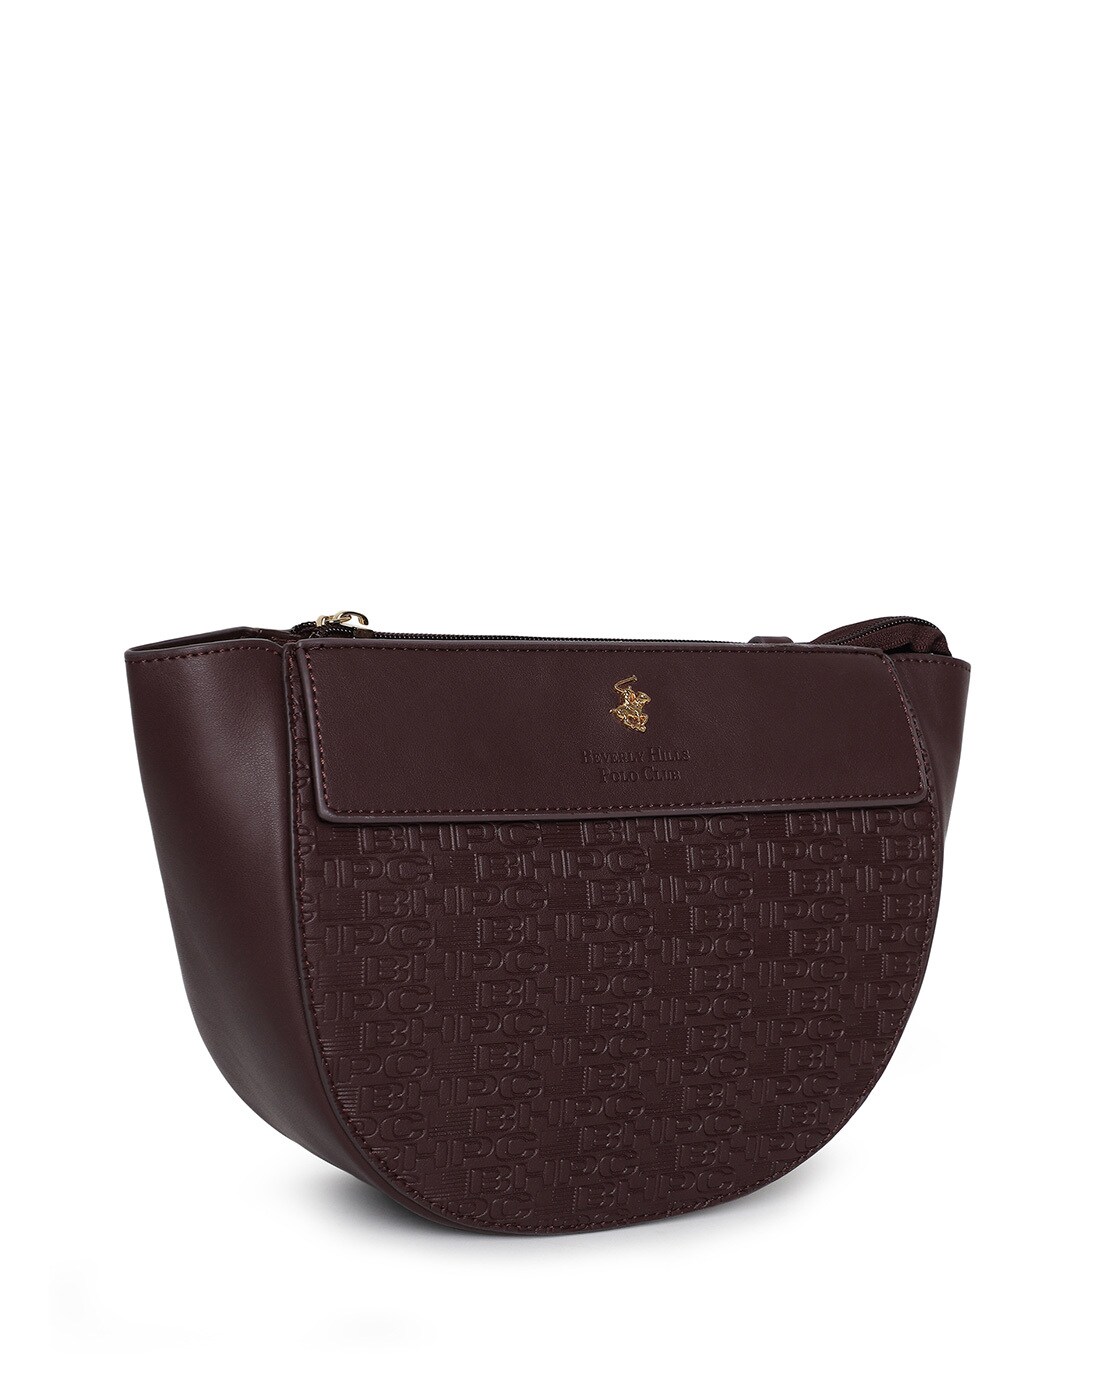 Club rochelier purse bag black bling | eBay